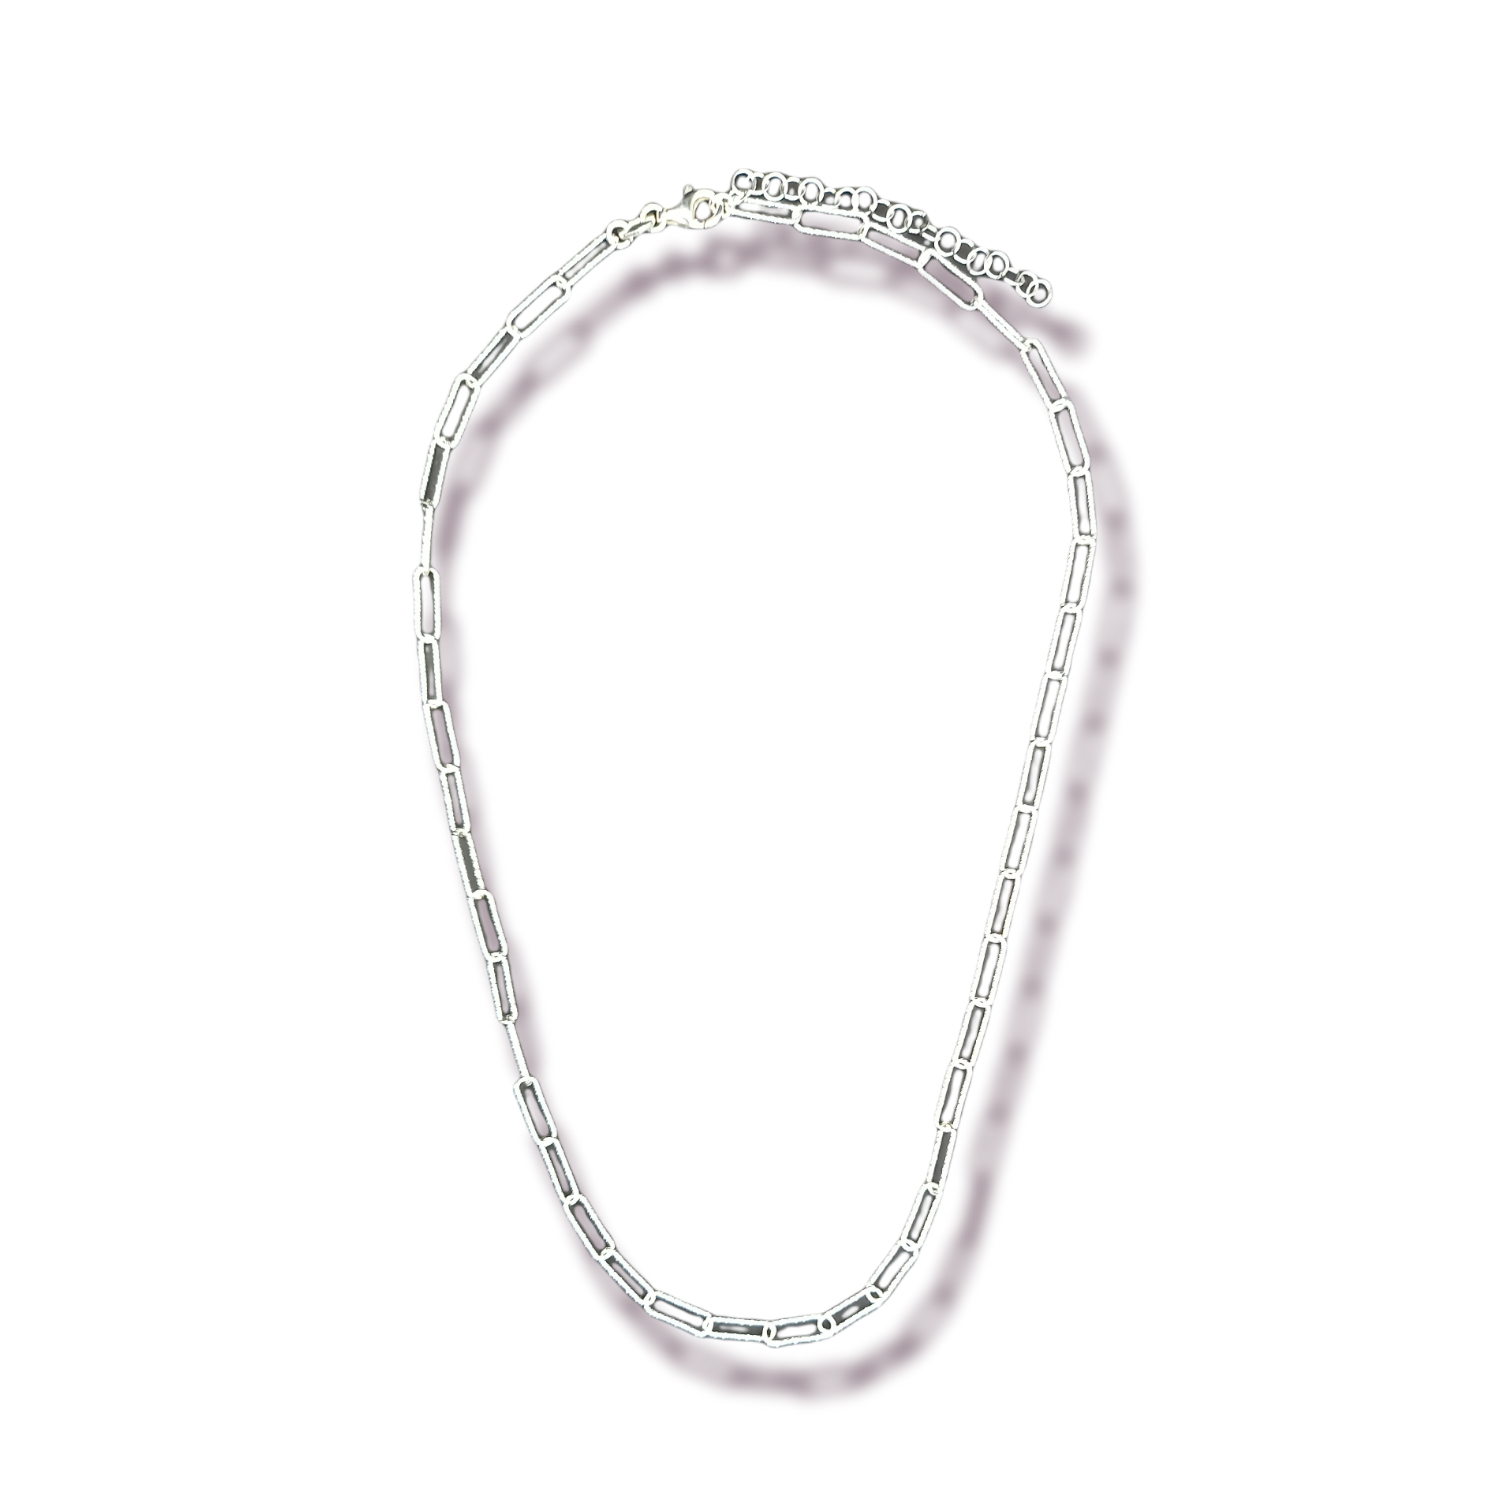 Veronica's necklace